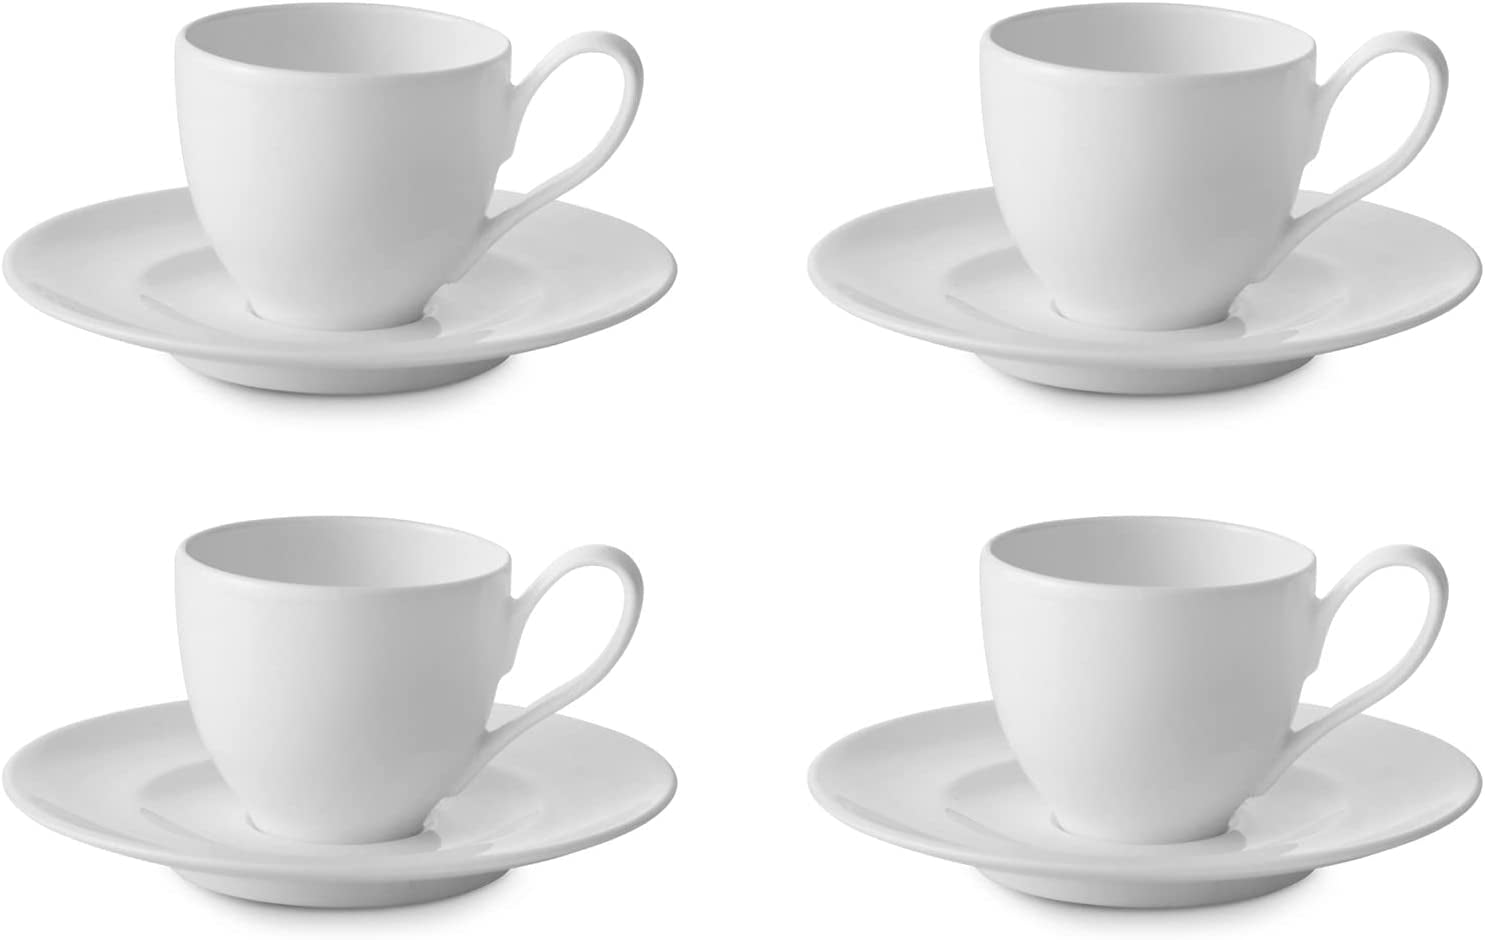 KIVY 3 oz Espresso Cups Set of 4 - Italian Style Espresso Cups and Saucers - Stoneware Espresso Cup Set - Expresso Shots Cup - Espresso Mugs 